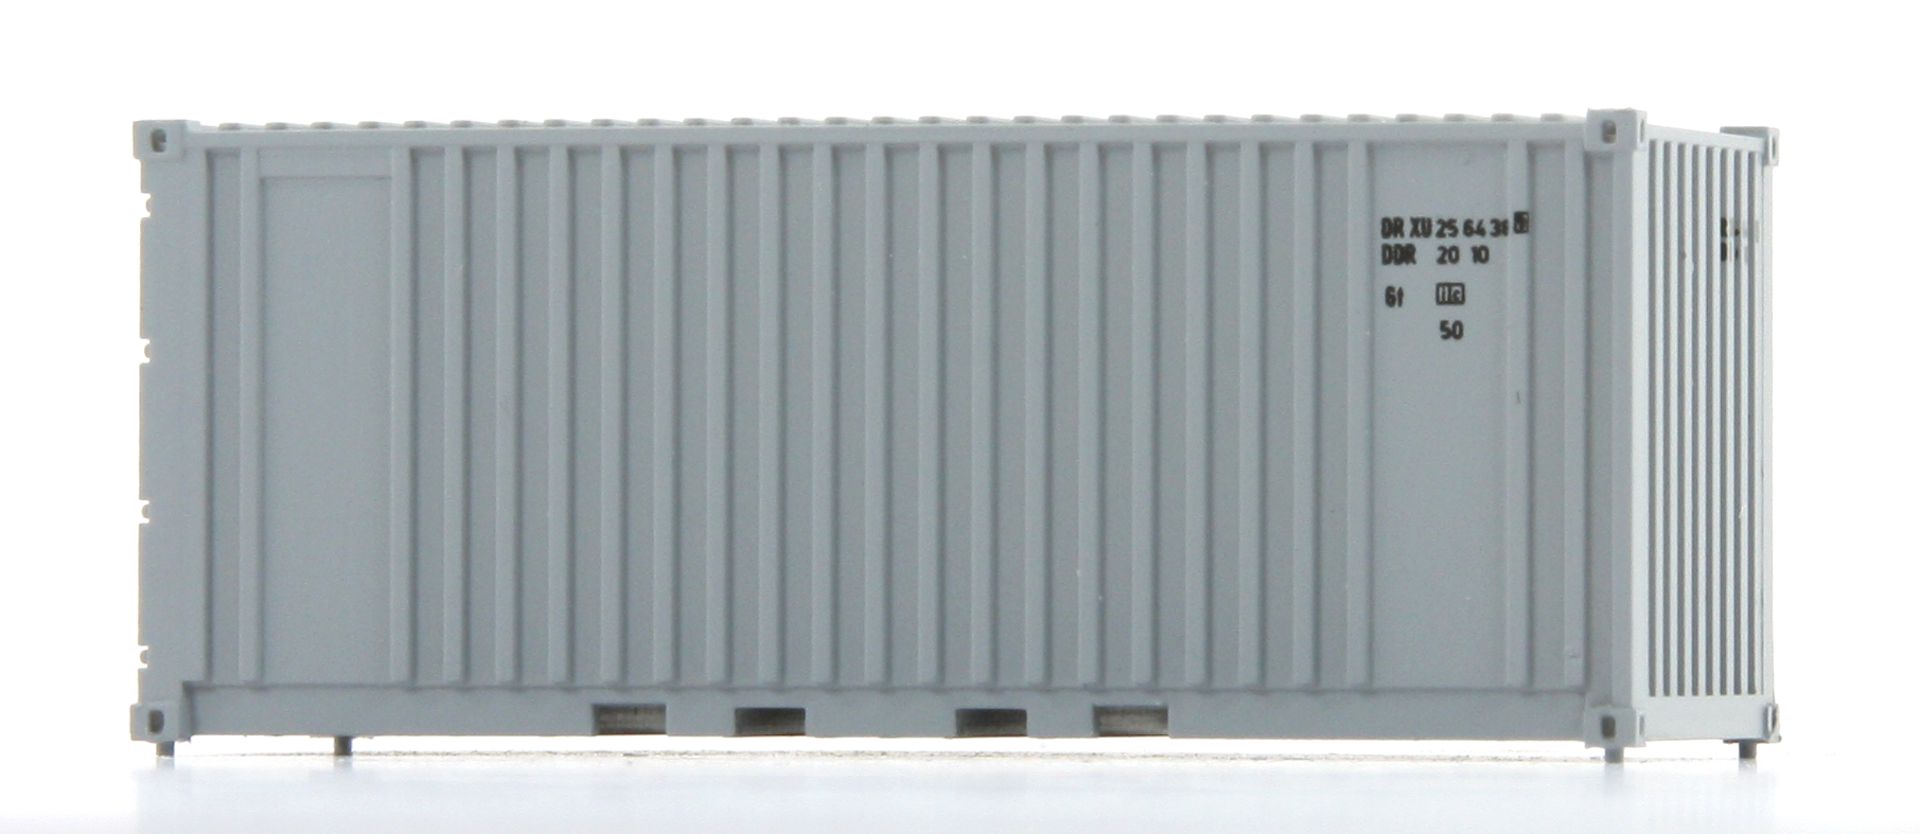 Hädl 711001-09 - 20 Fuß Container, grau, DR